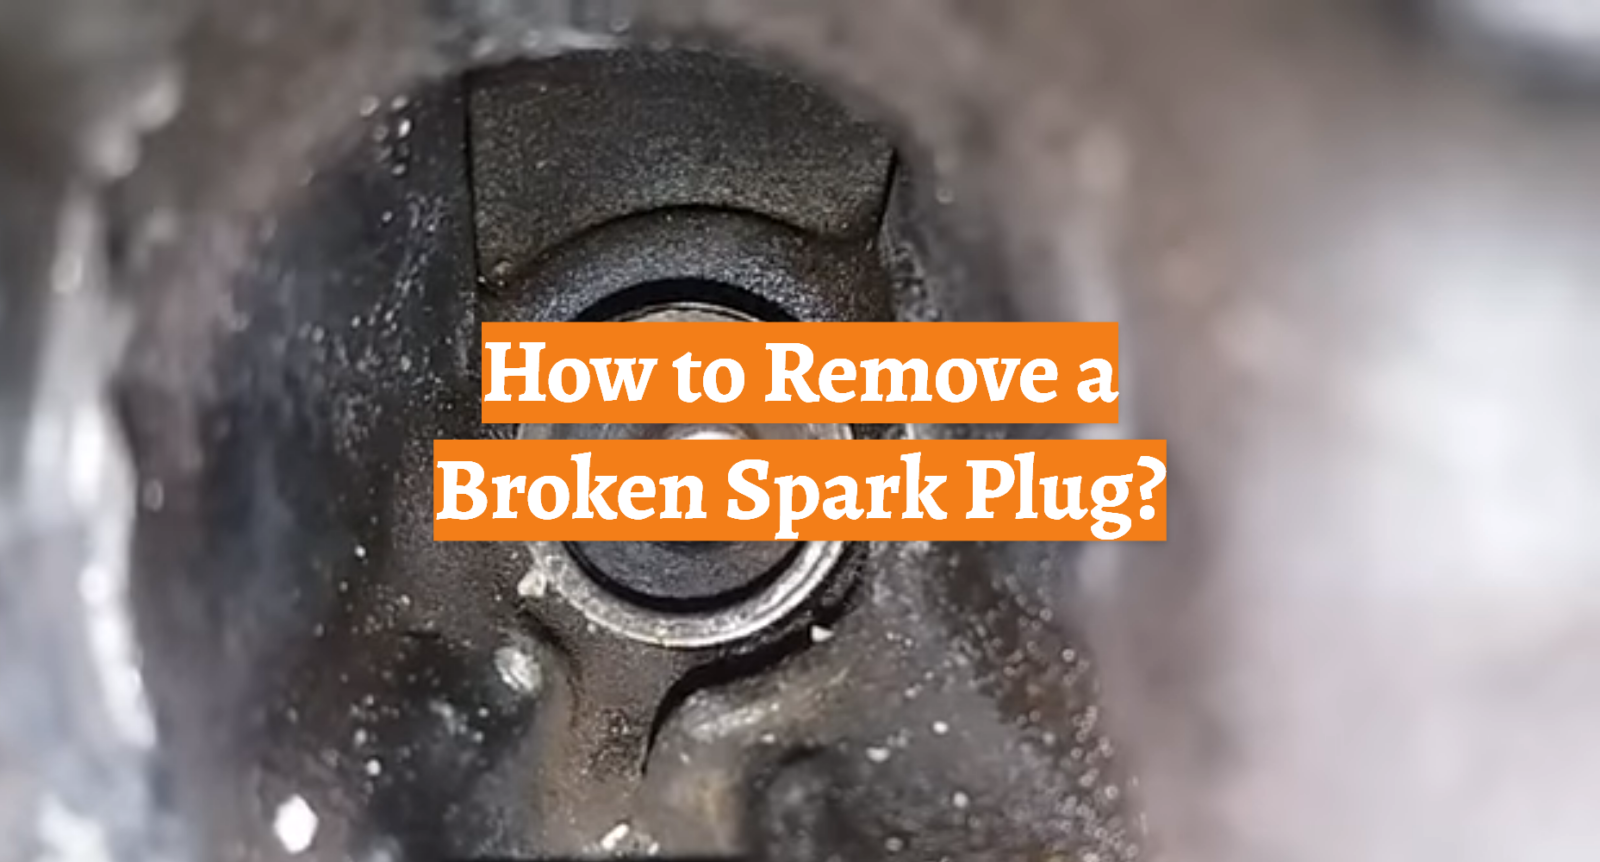 How to Remove a Broken Spark Plug?